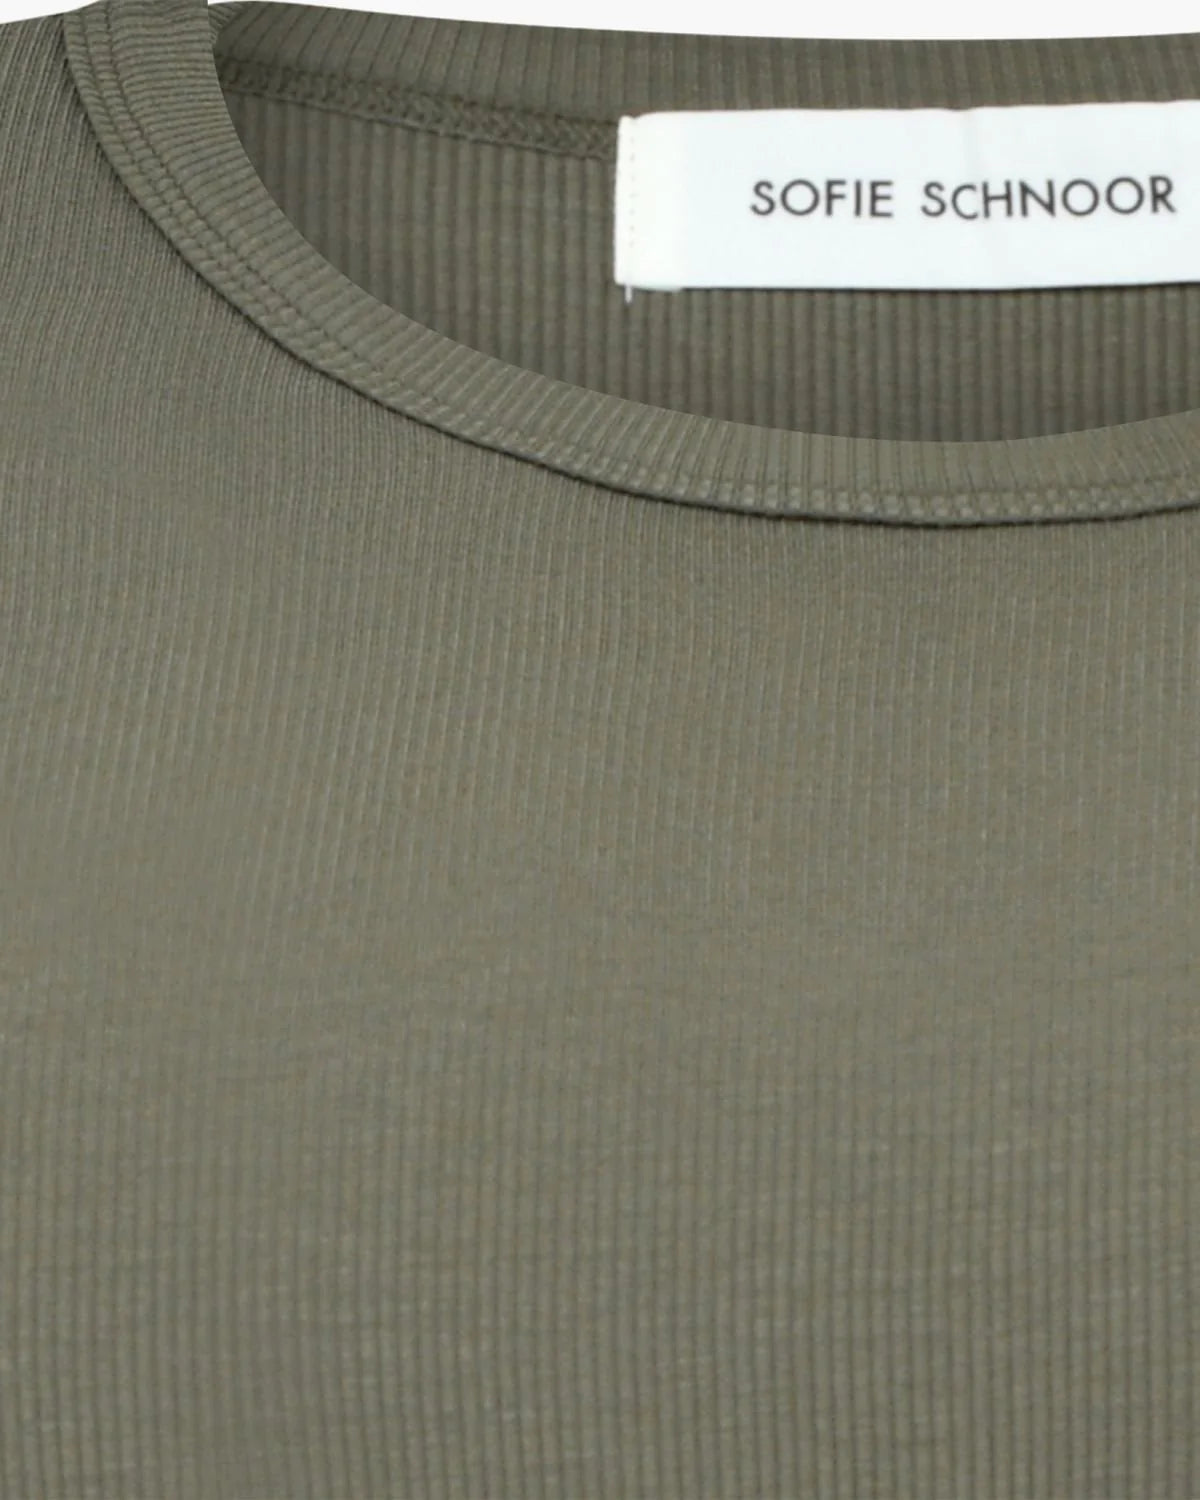 Sofie Schnoor T-shirt Army Green